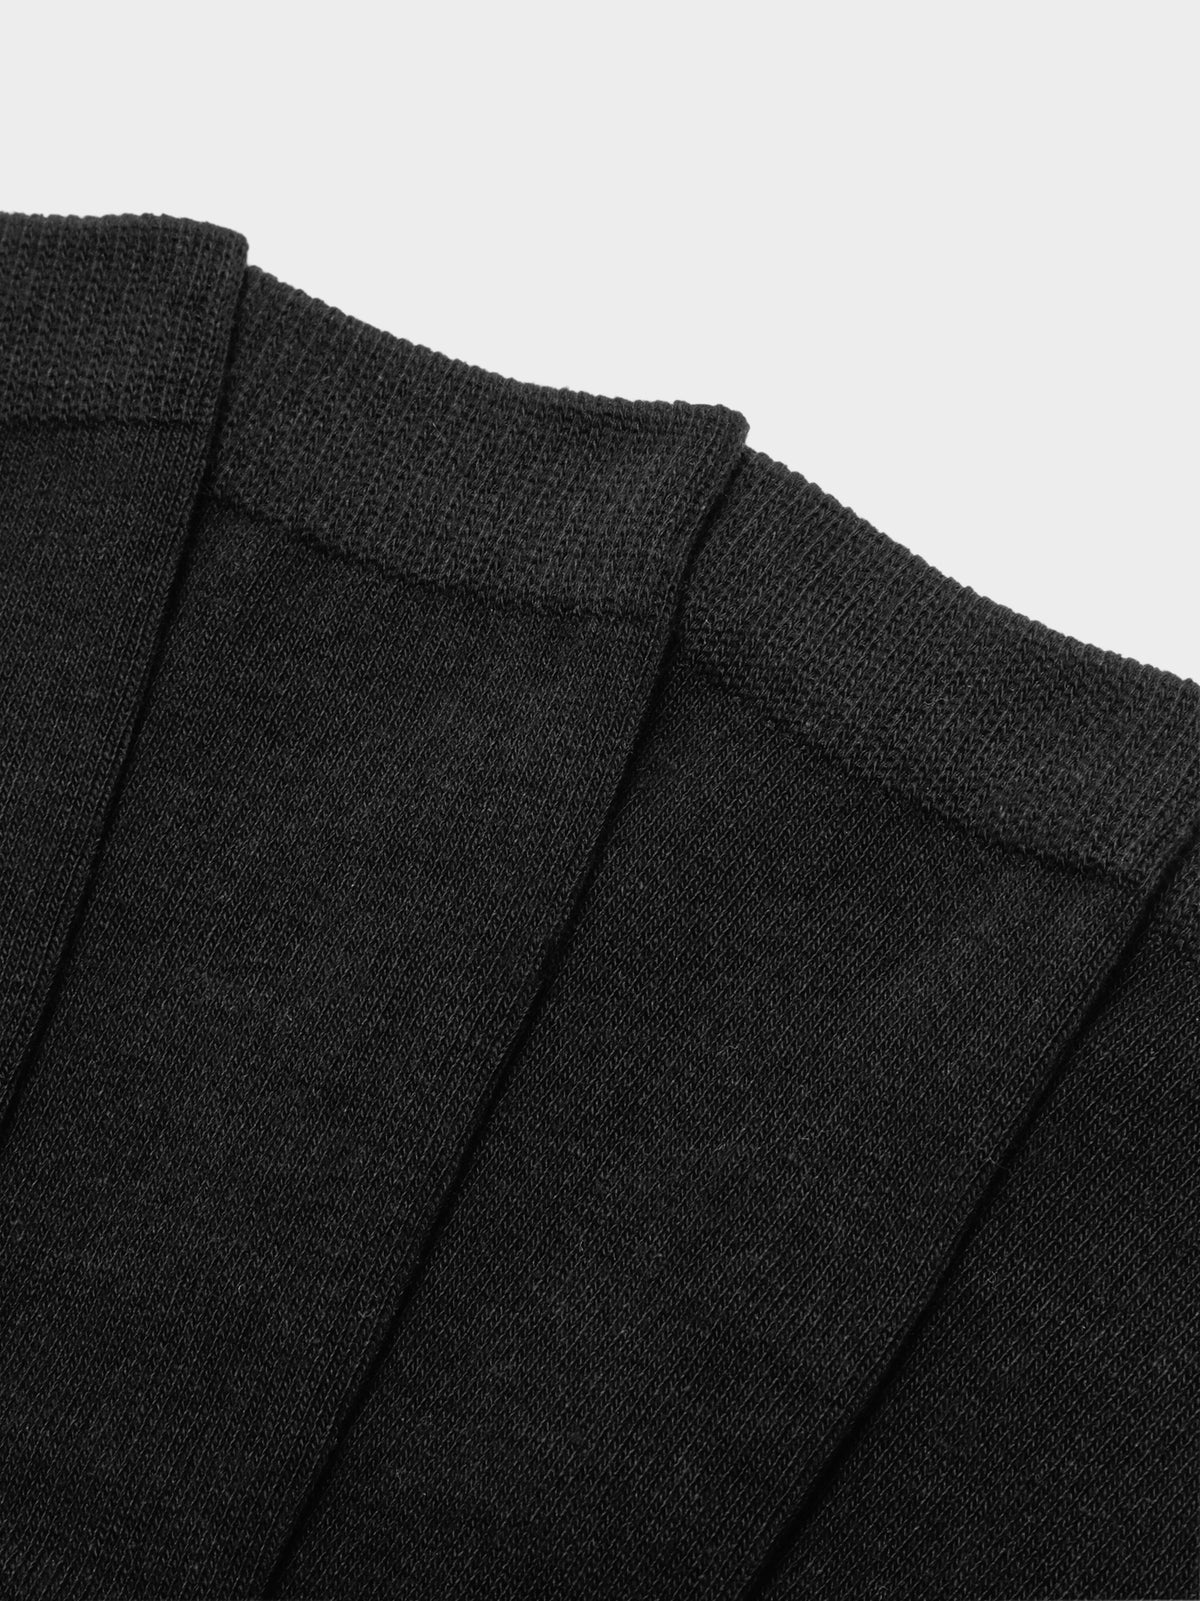 4 Pairs of Crew Socks in Black